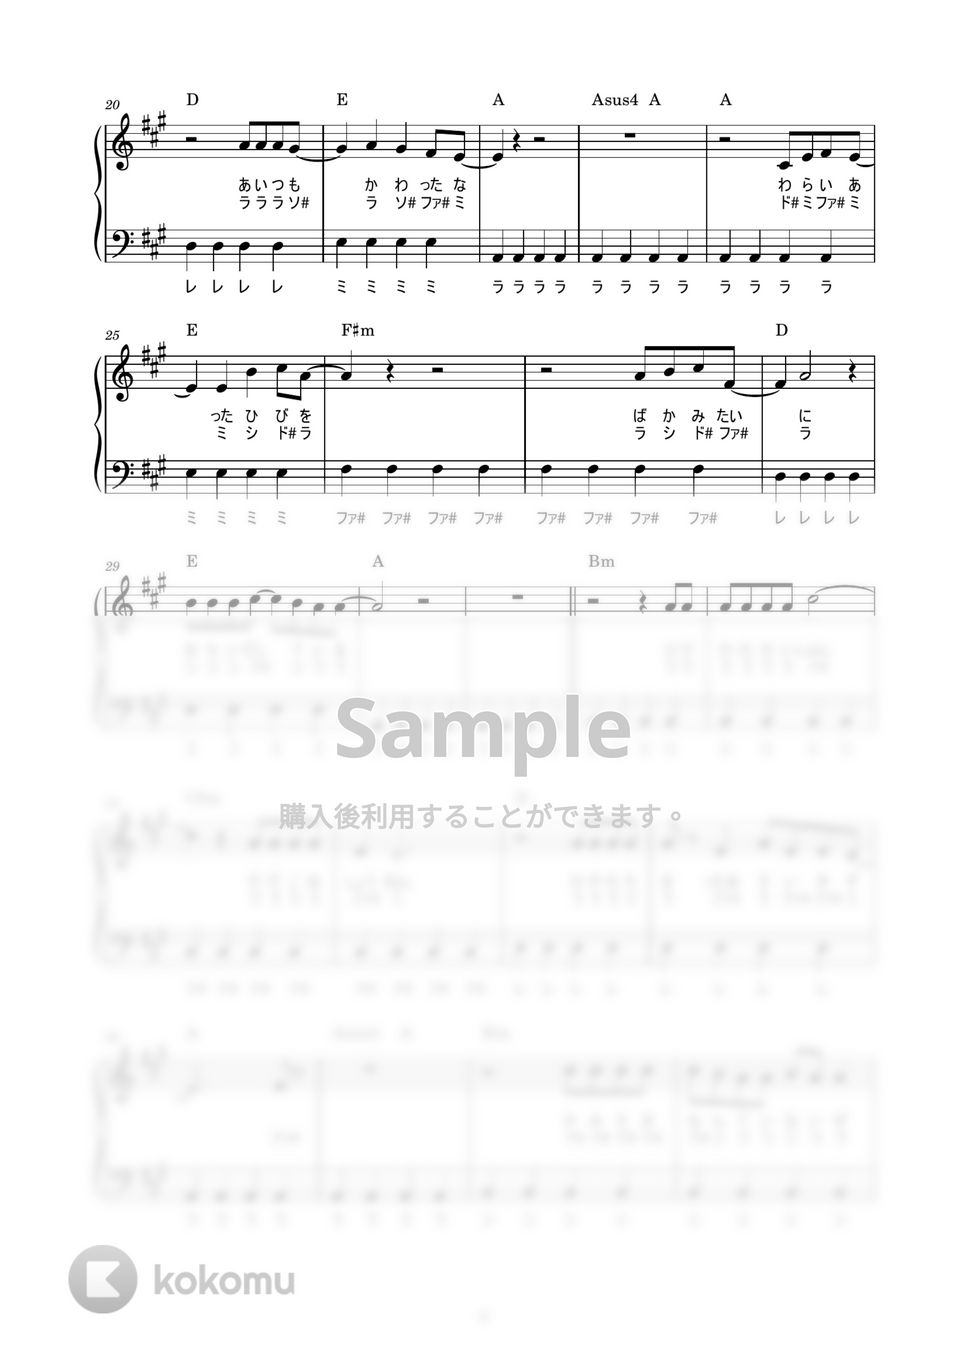 Hump Back - 拝啓、少年よ (かんたん / 歌詞付き / ドレミ付き / 初心者) by piano.tokyo